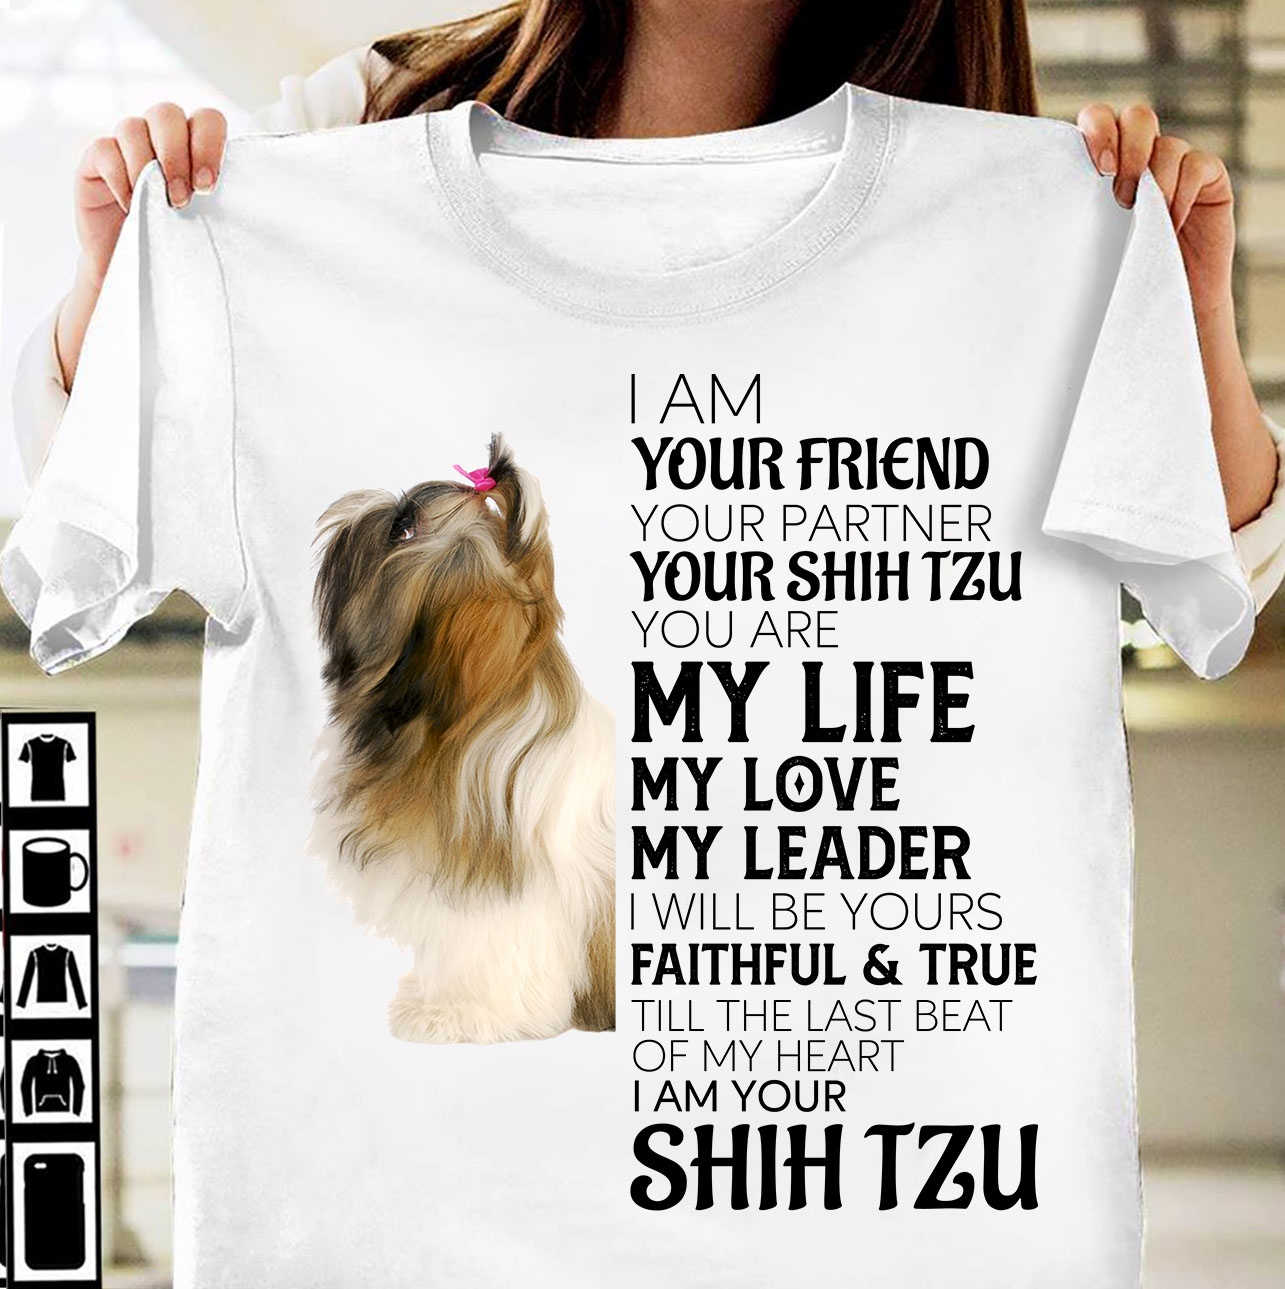 I am your friend, your partner, your Shih Tzu - Shih Tzu dog